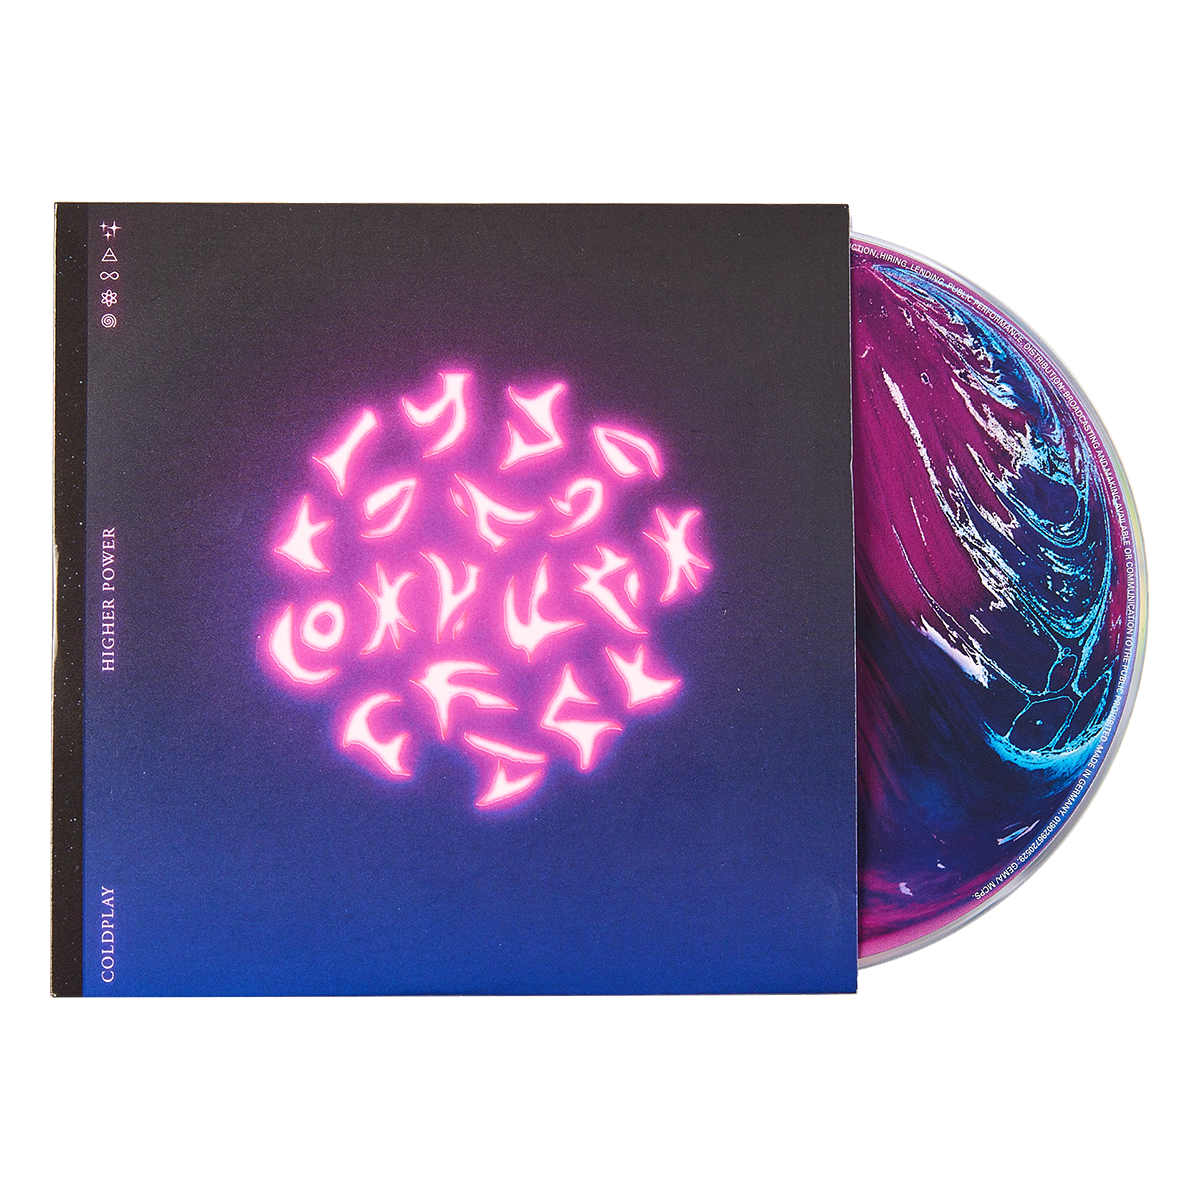 HIGHER POWER - CD SINGLE-Coldplay